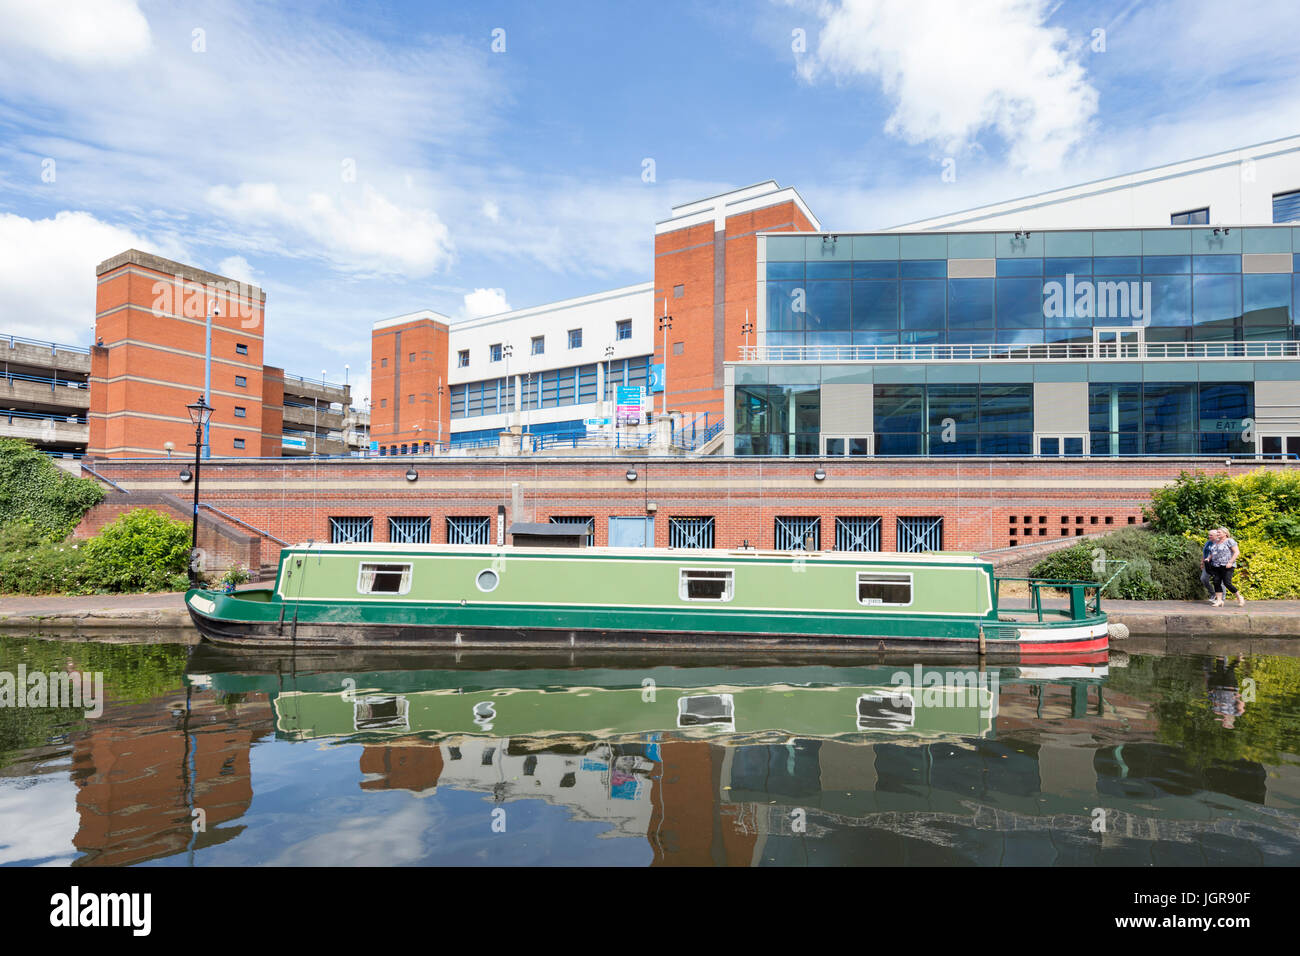 Birmingham canal navergations, Birmingham, England, UK Stock Photo